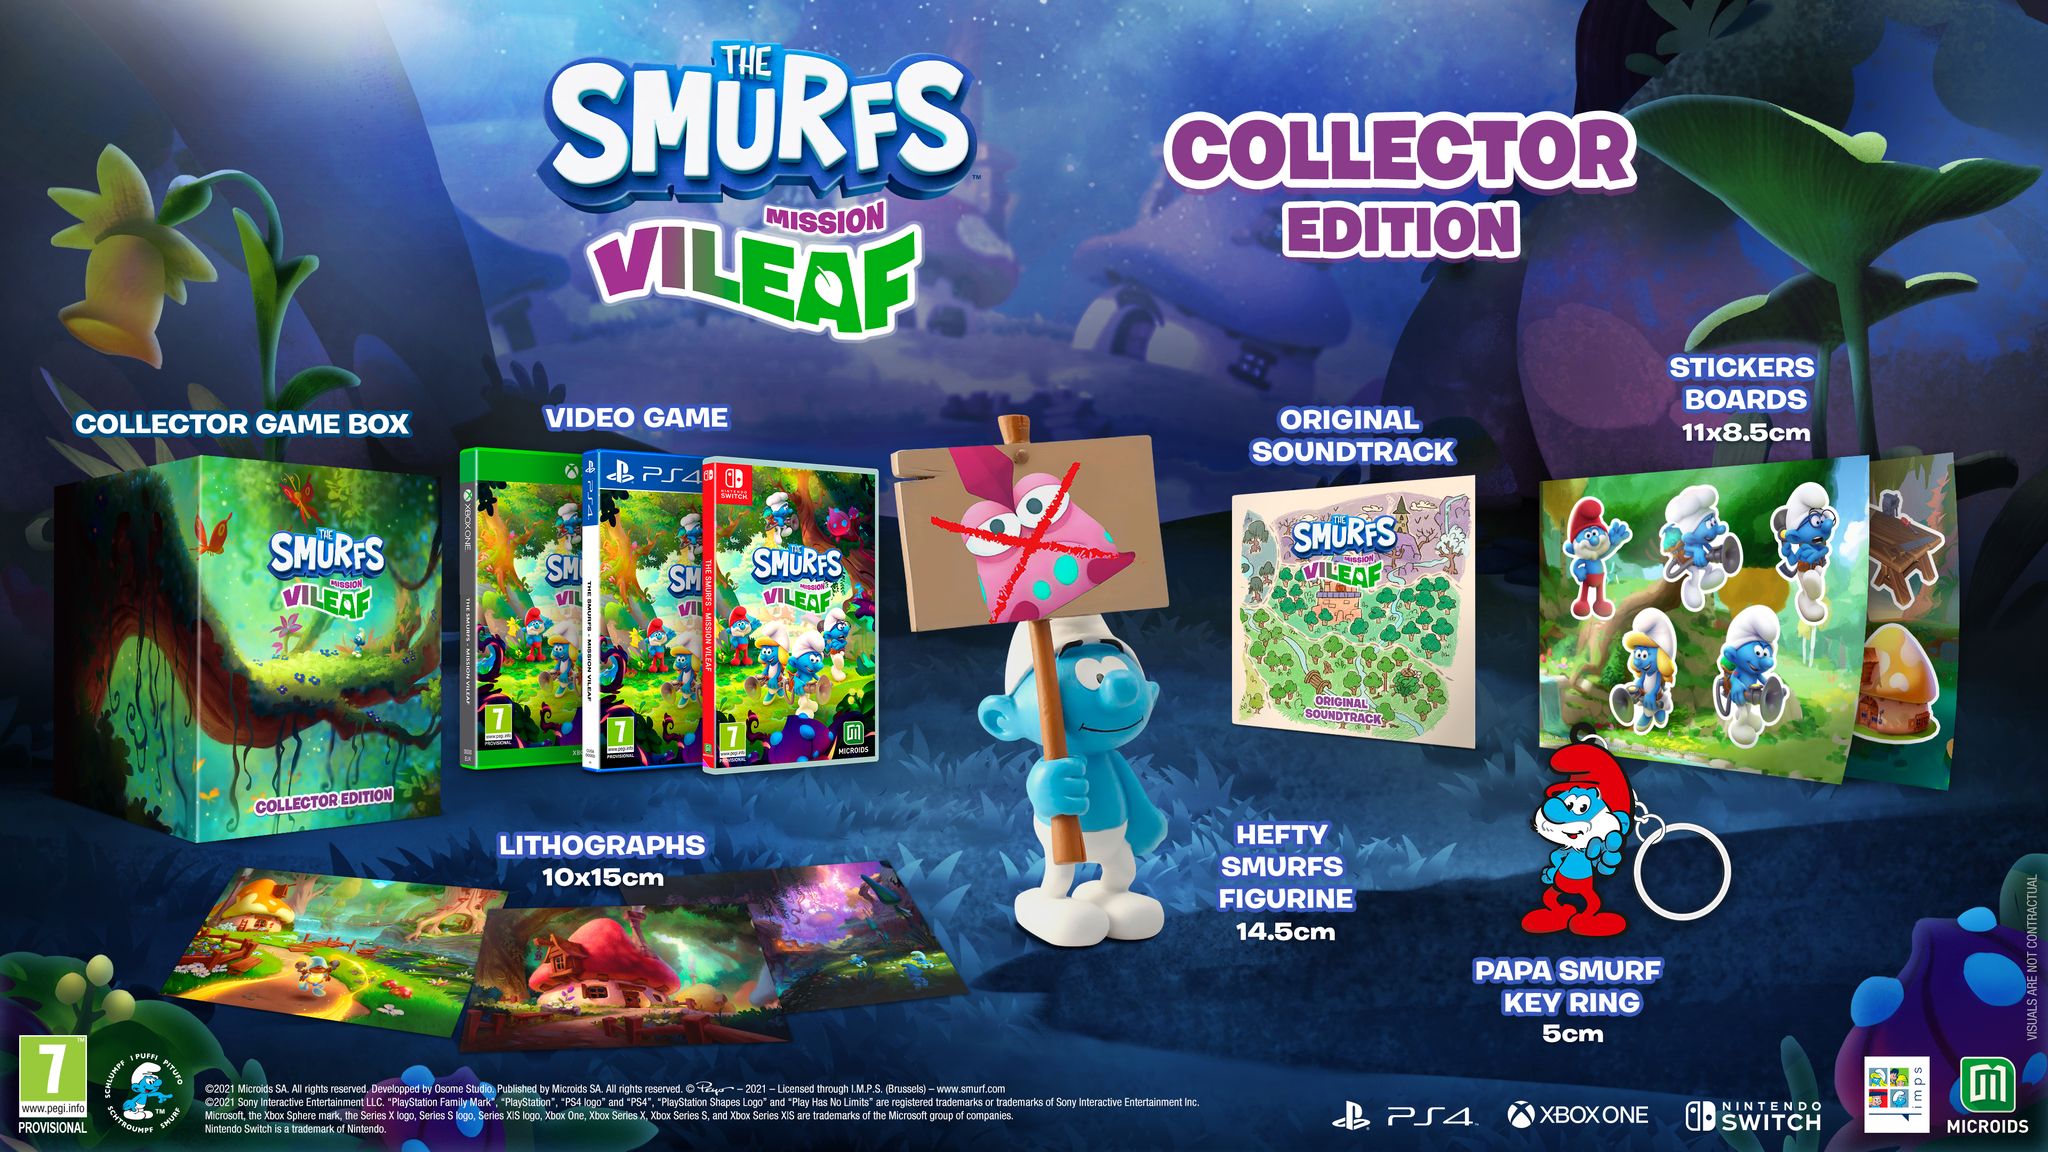 The Smurfs Mission Vileaf Edycja Kolekcjonerska